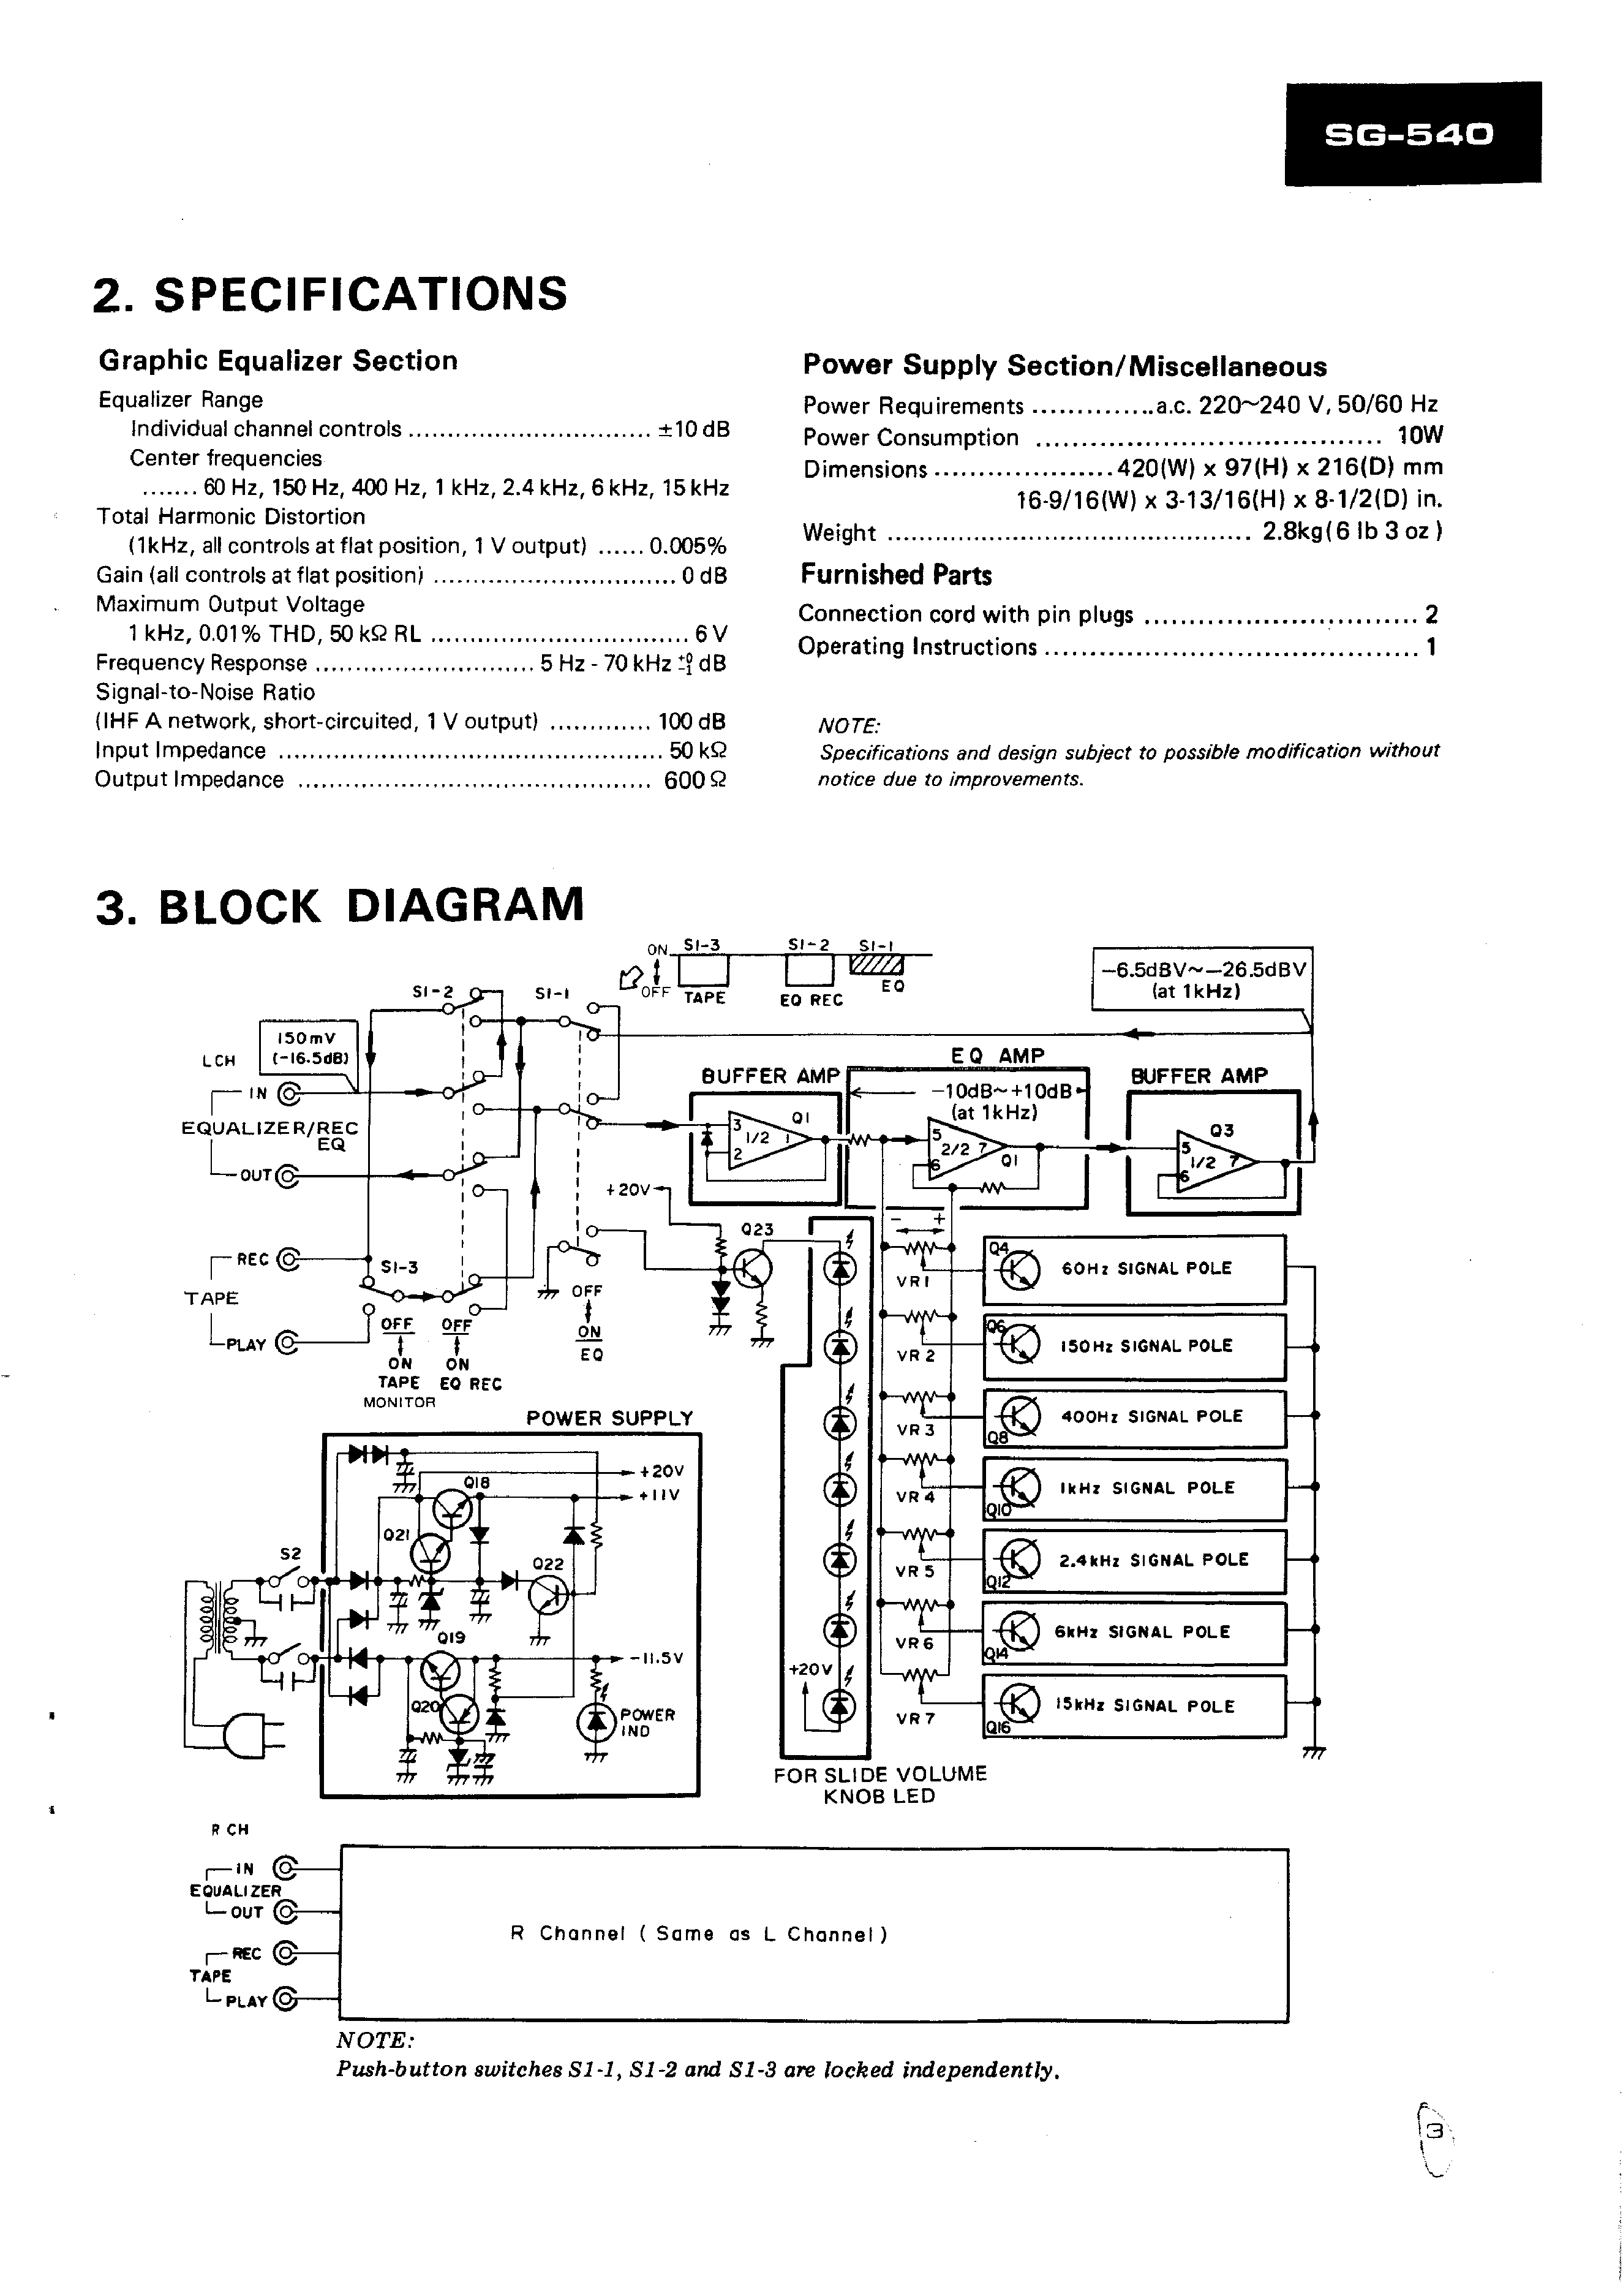 Service Manual-Anleitung für Pioneer SG-540 